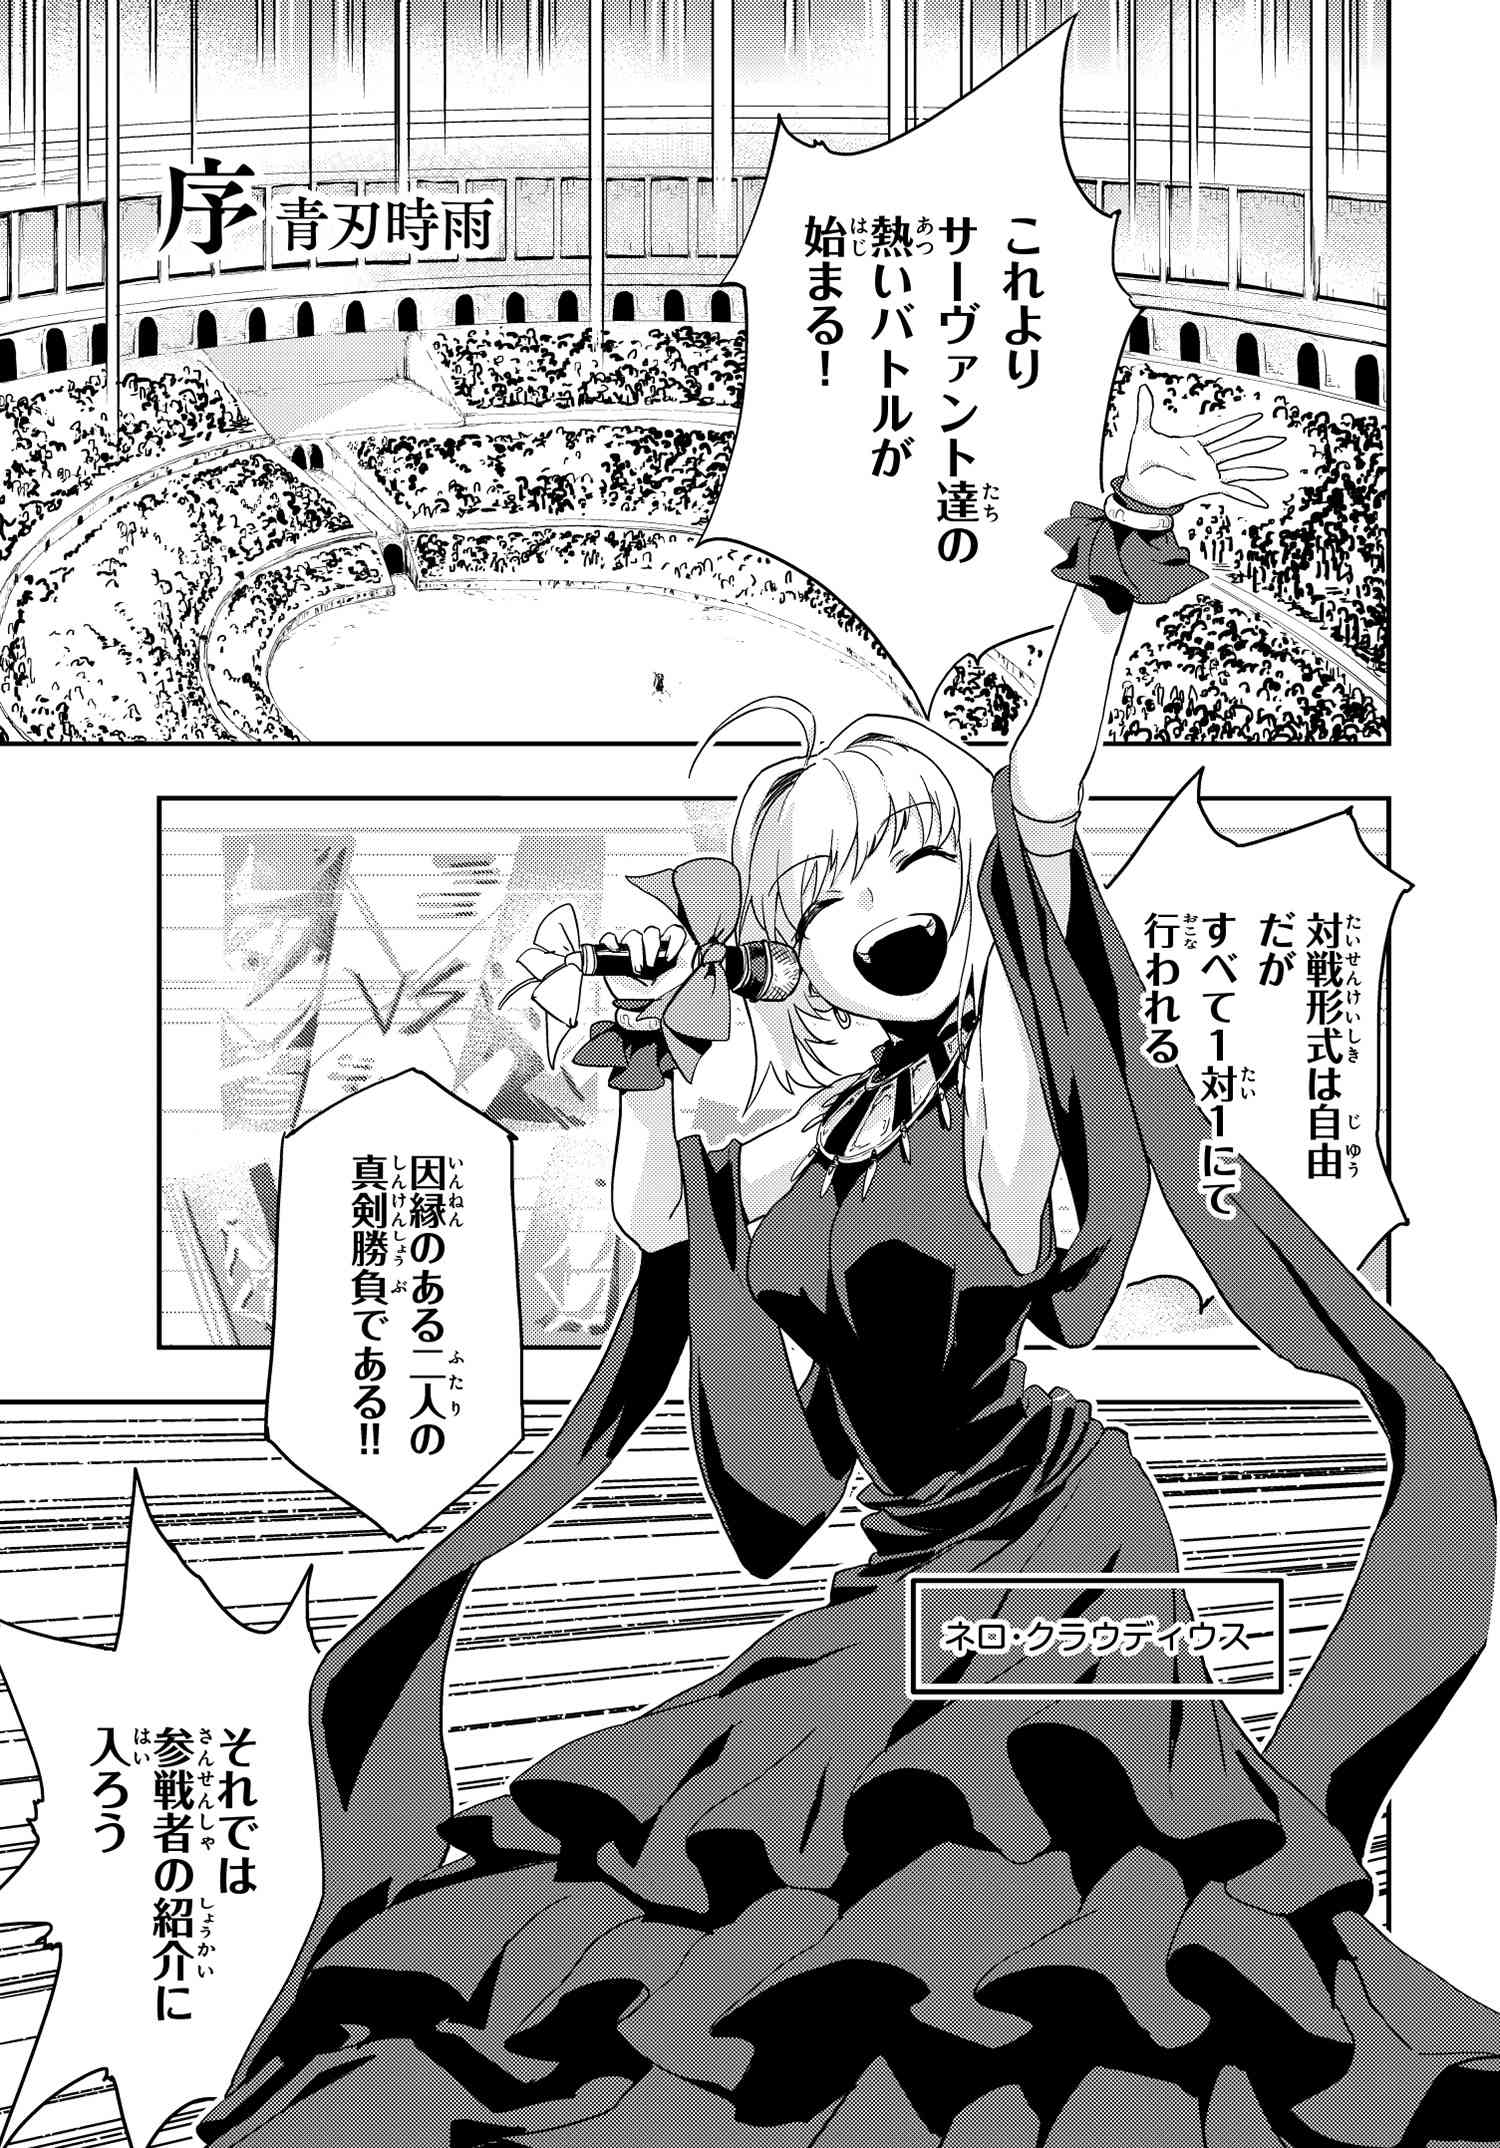 Fate Grand Order コミックアラカルト Plus Sp 対決編 序 漫画 青葉時雨 Type Moonコミックエース 無料で漫画 が読めるオンラインマガジン